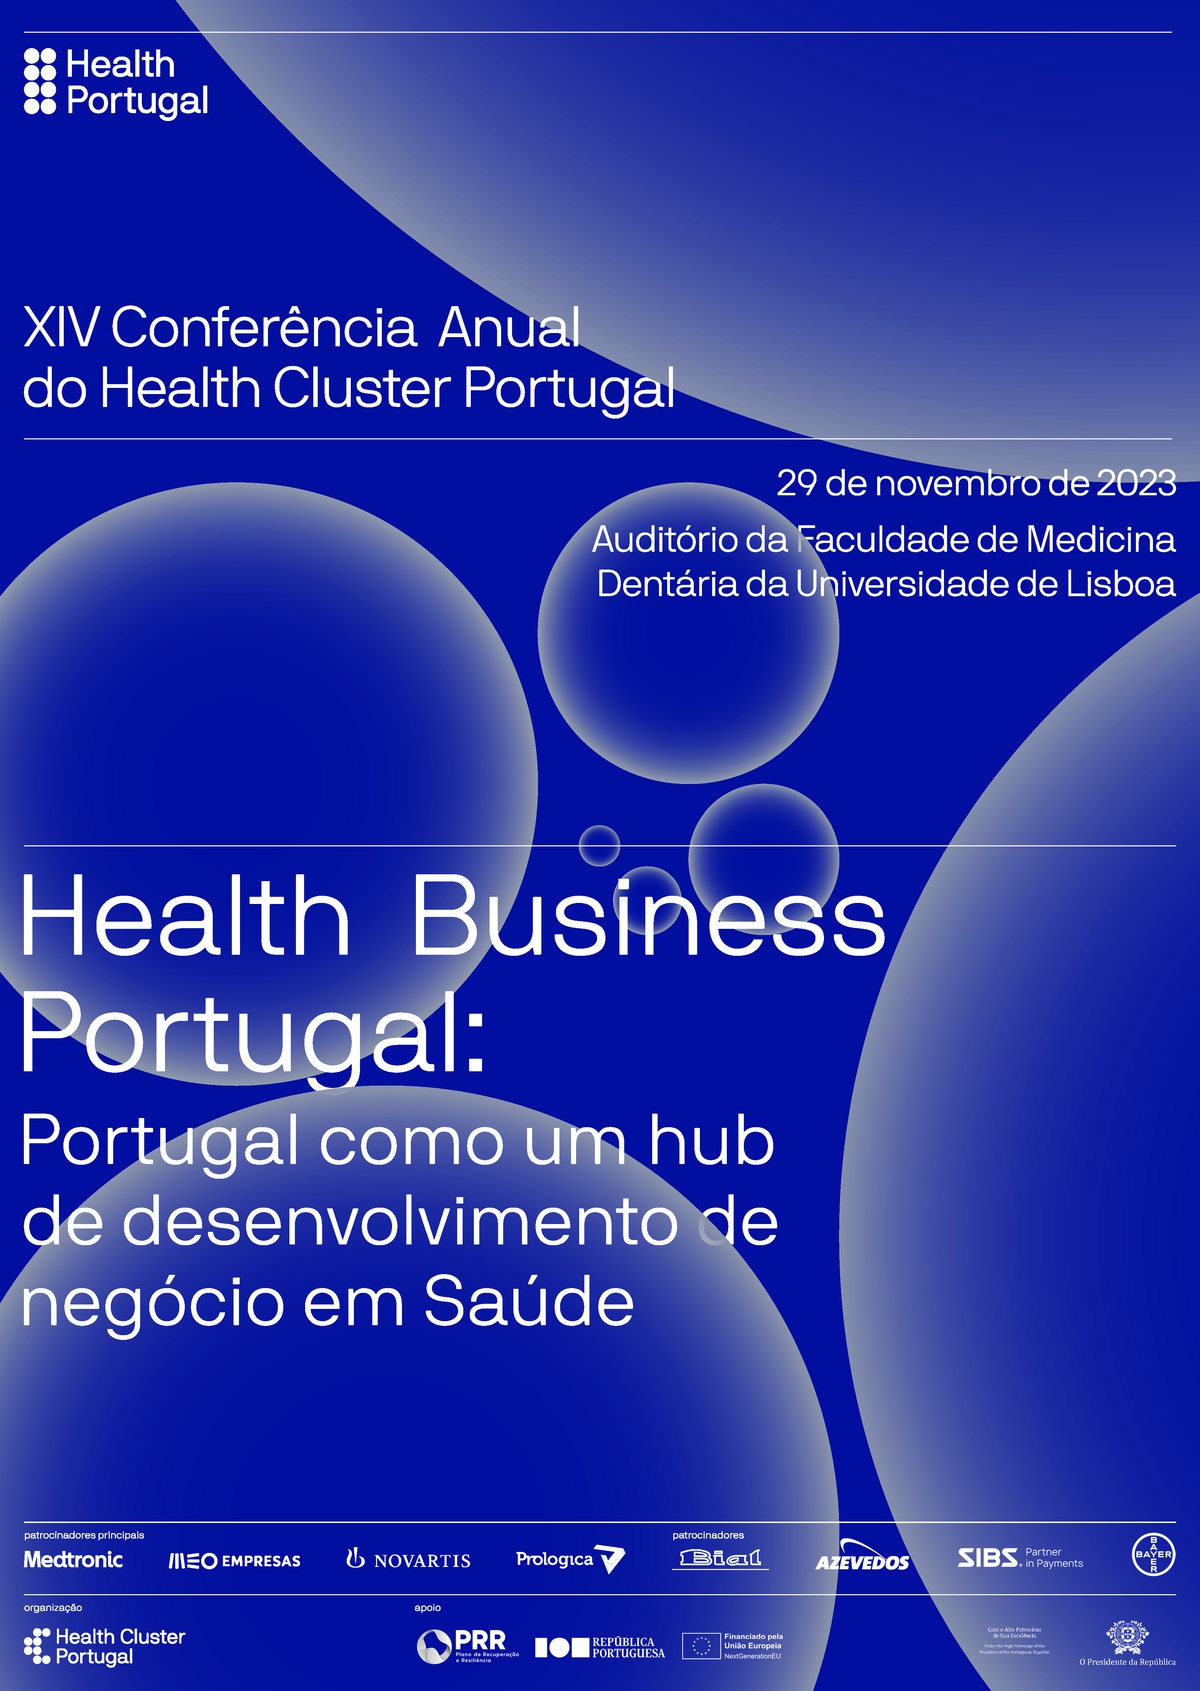 XIV Conferência Anual do Health Cluster Portugal